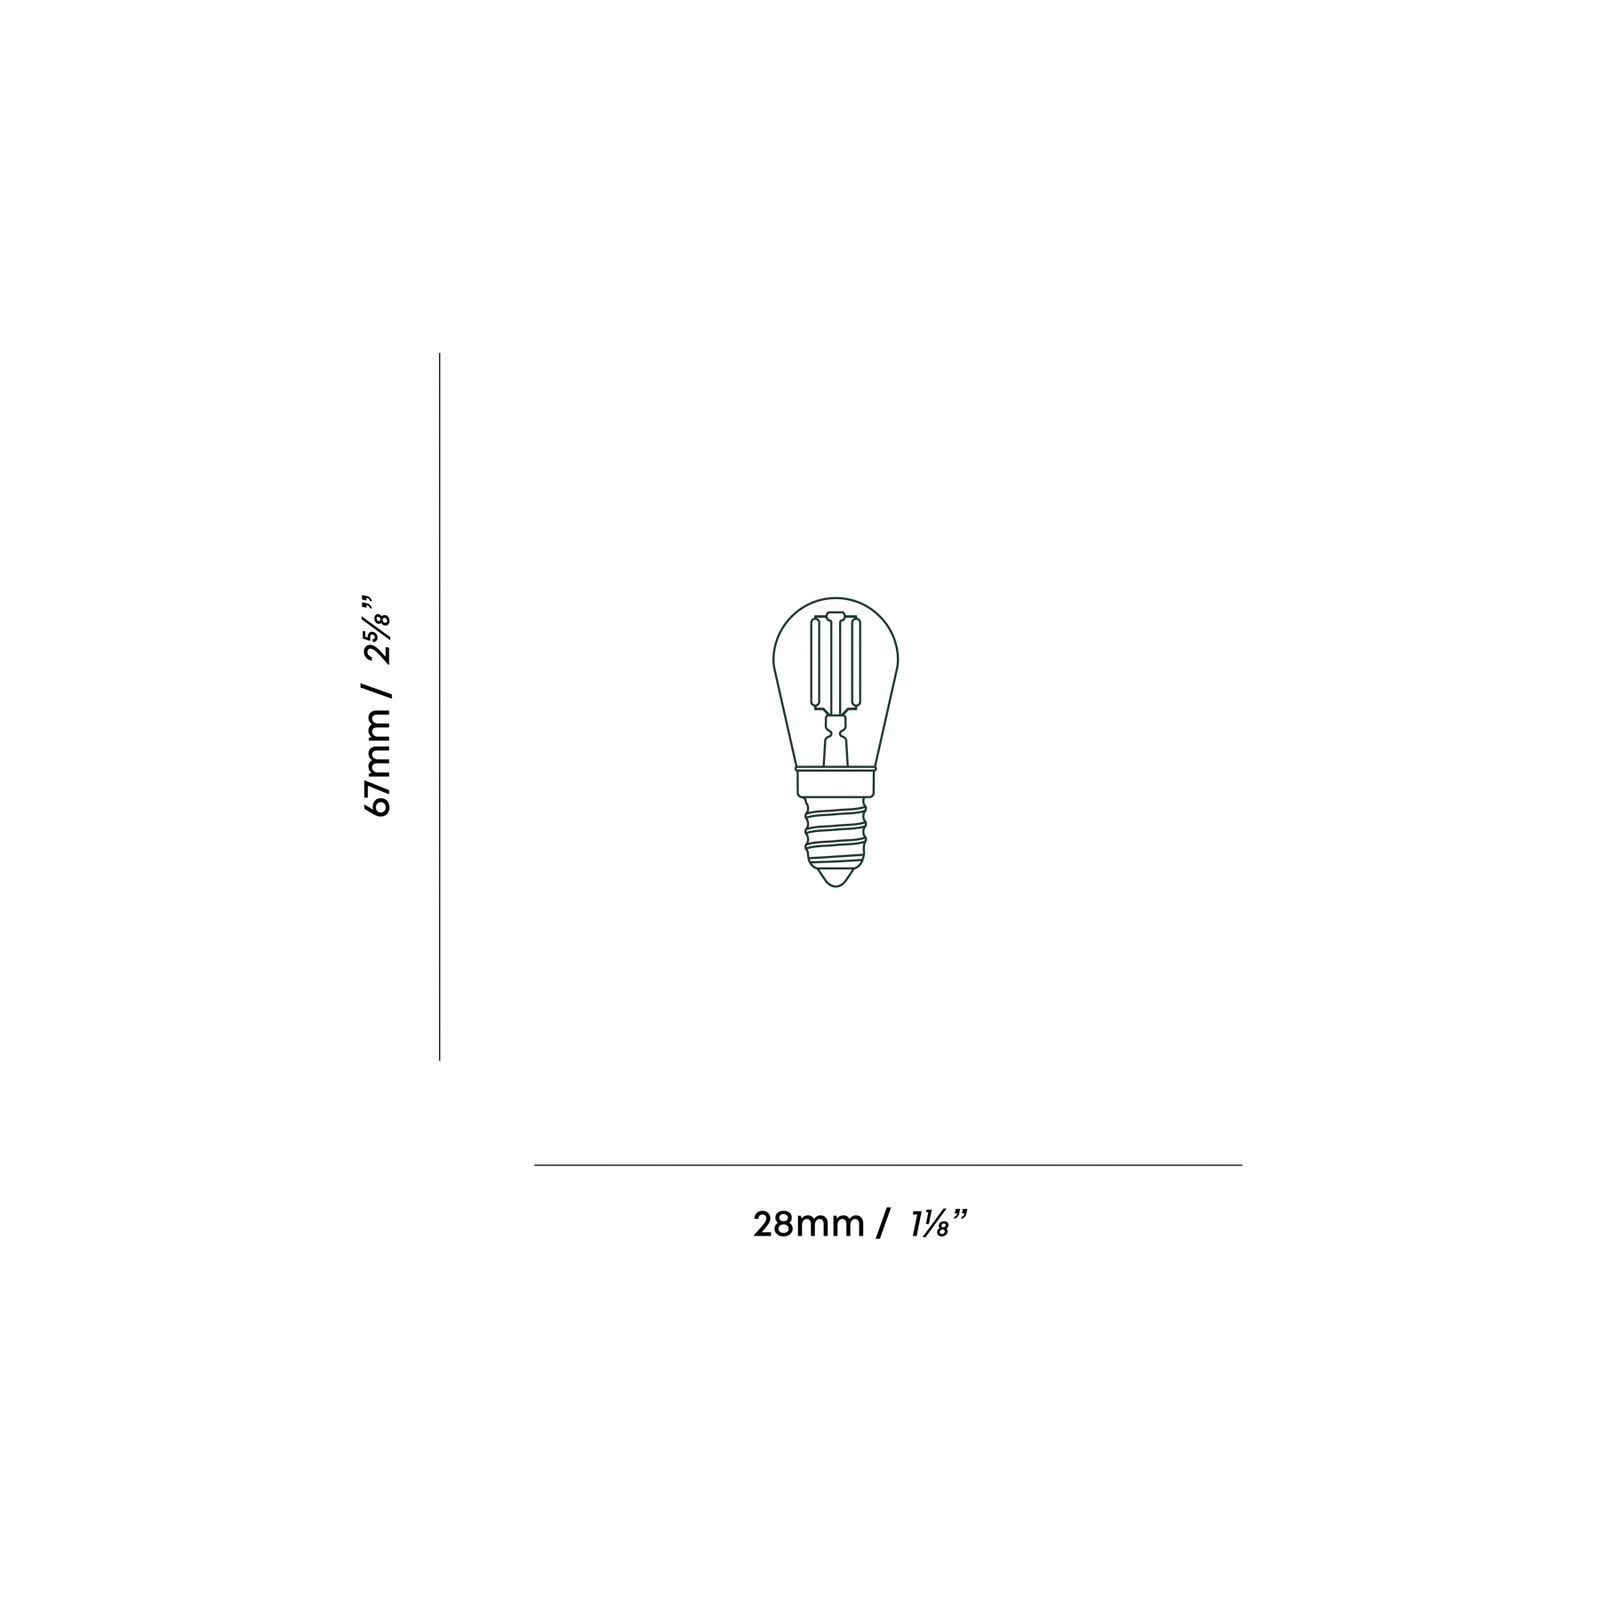 Tala LED lamp E14, 2W, getint glas, 2.200 K, 120 lm